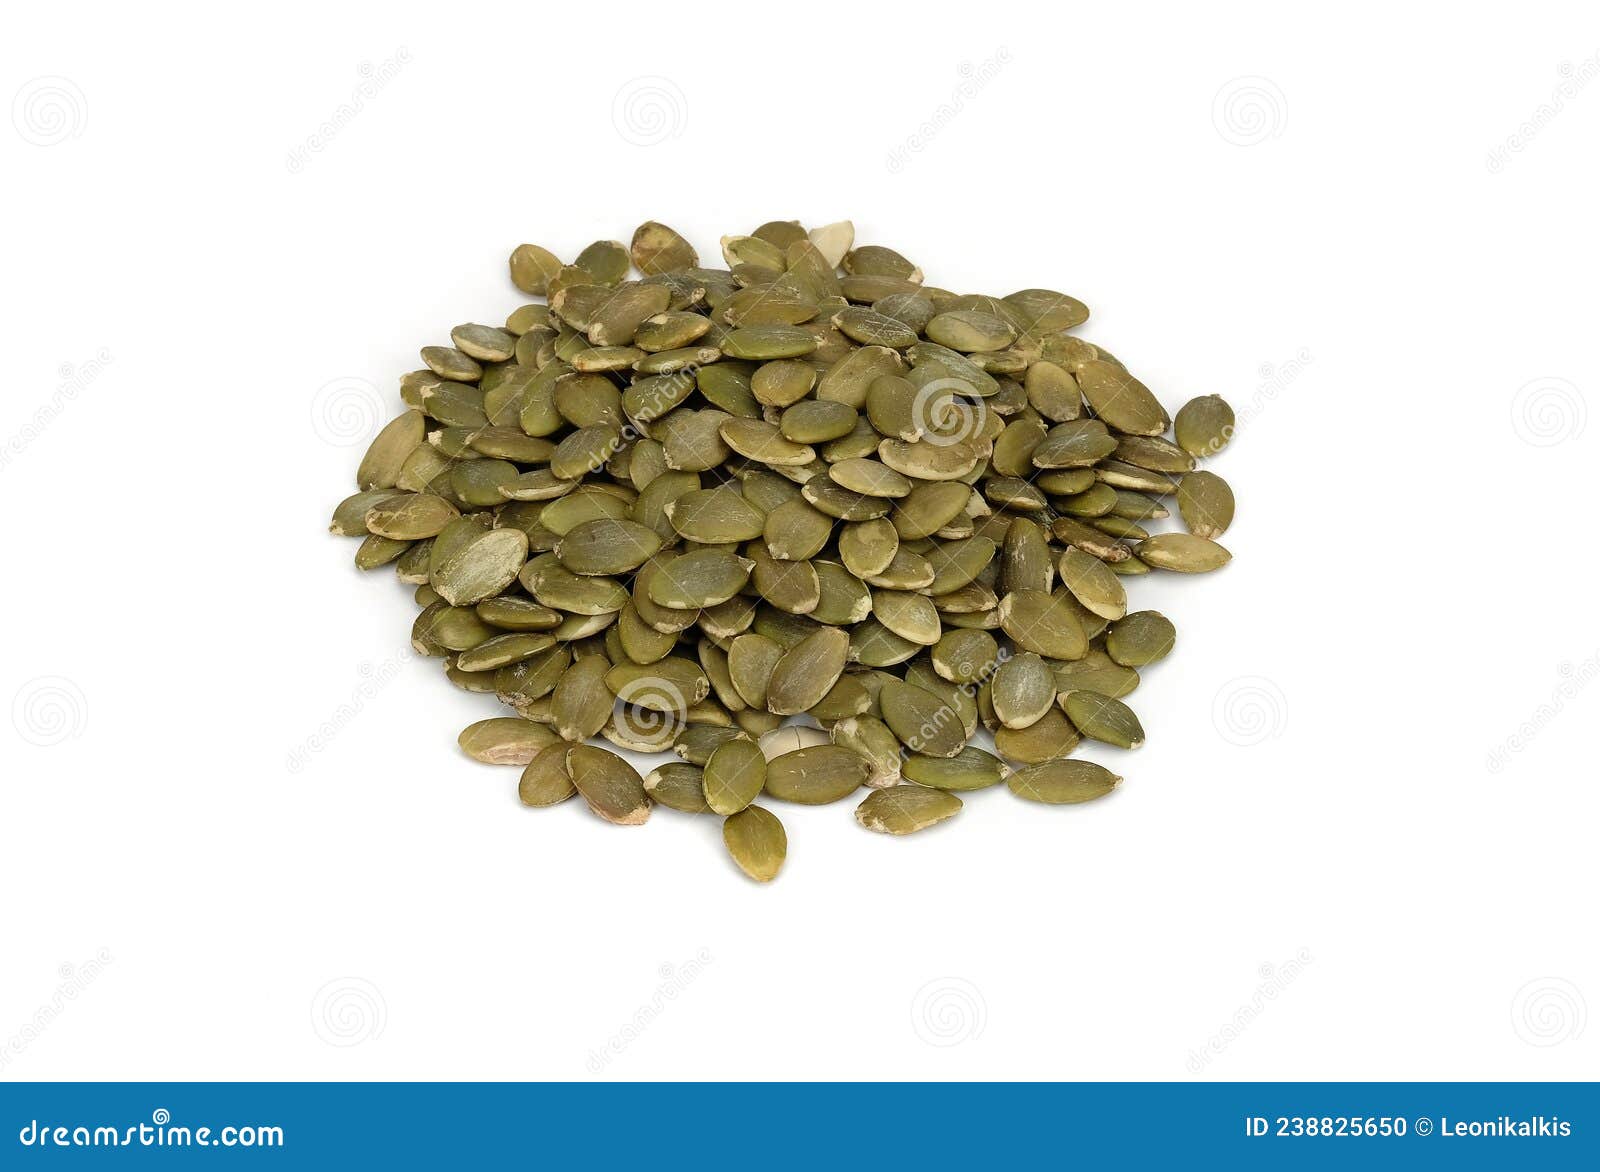 pumpkin seeds or pepitas 